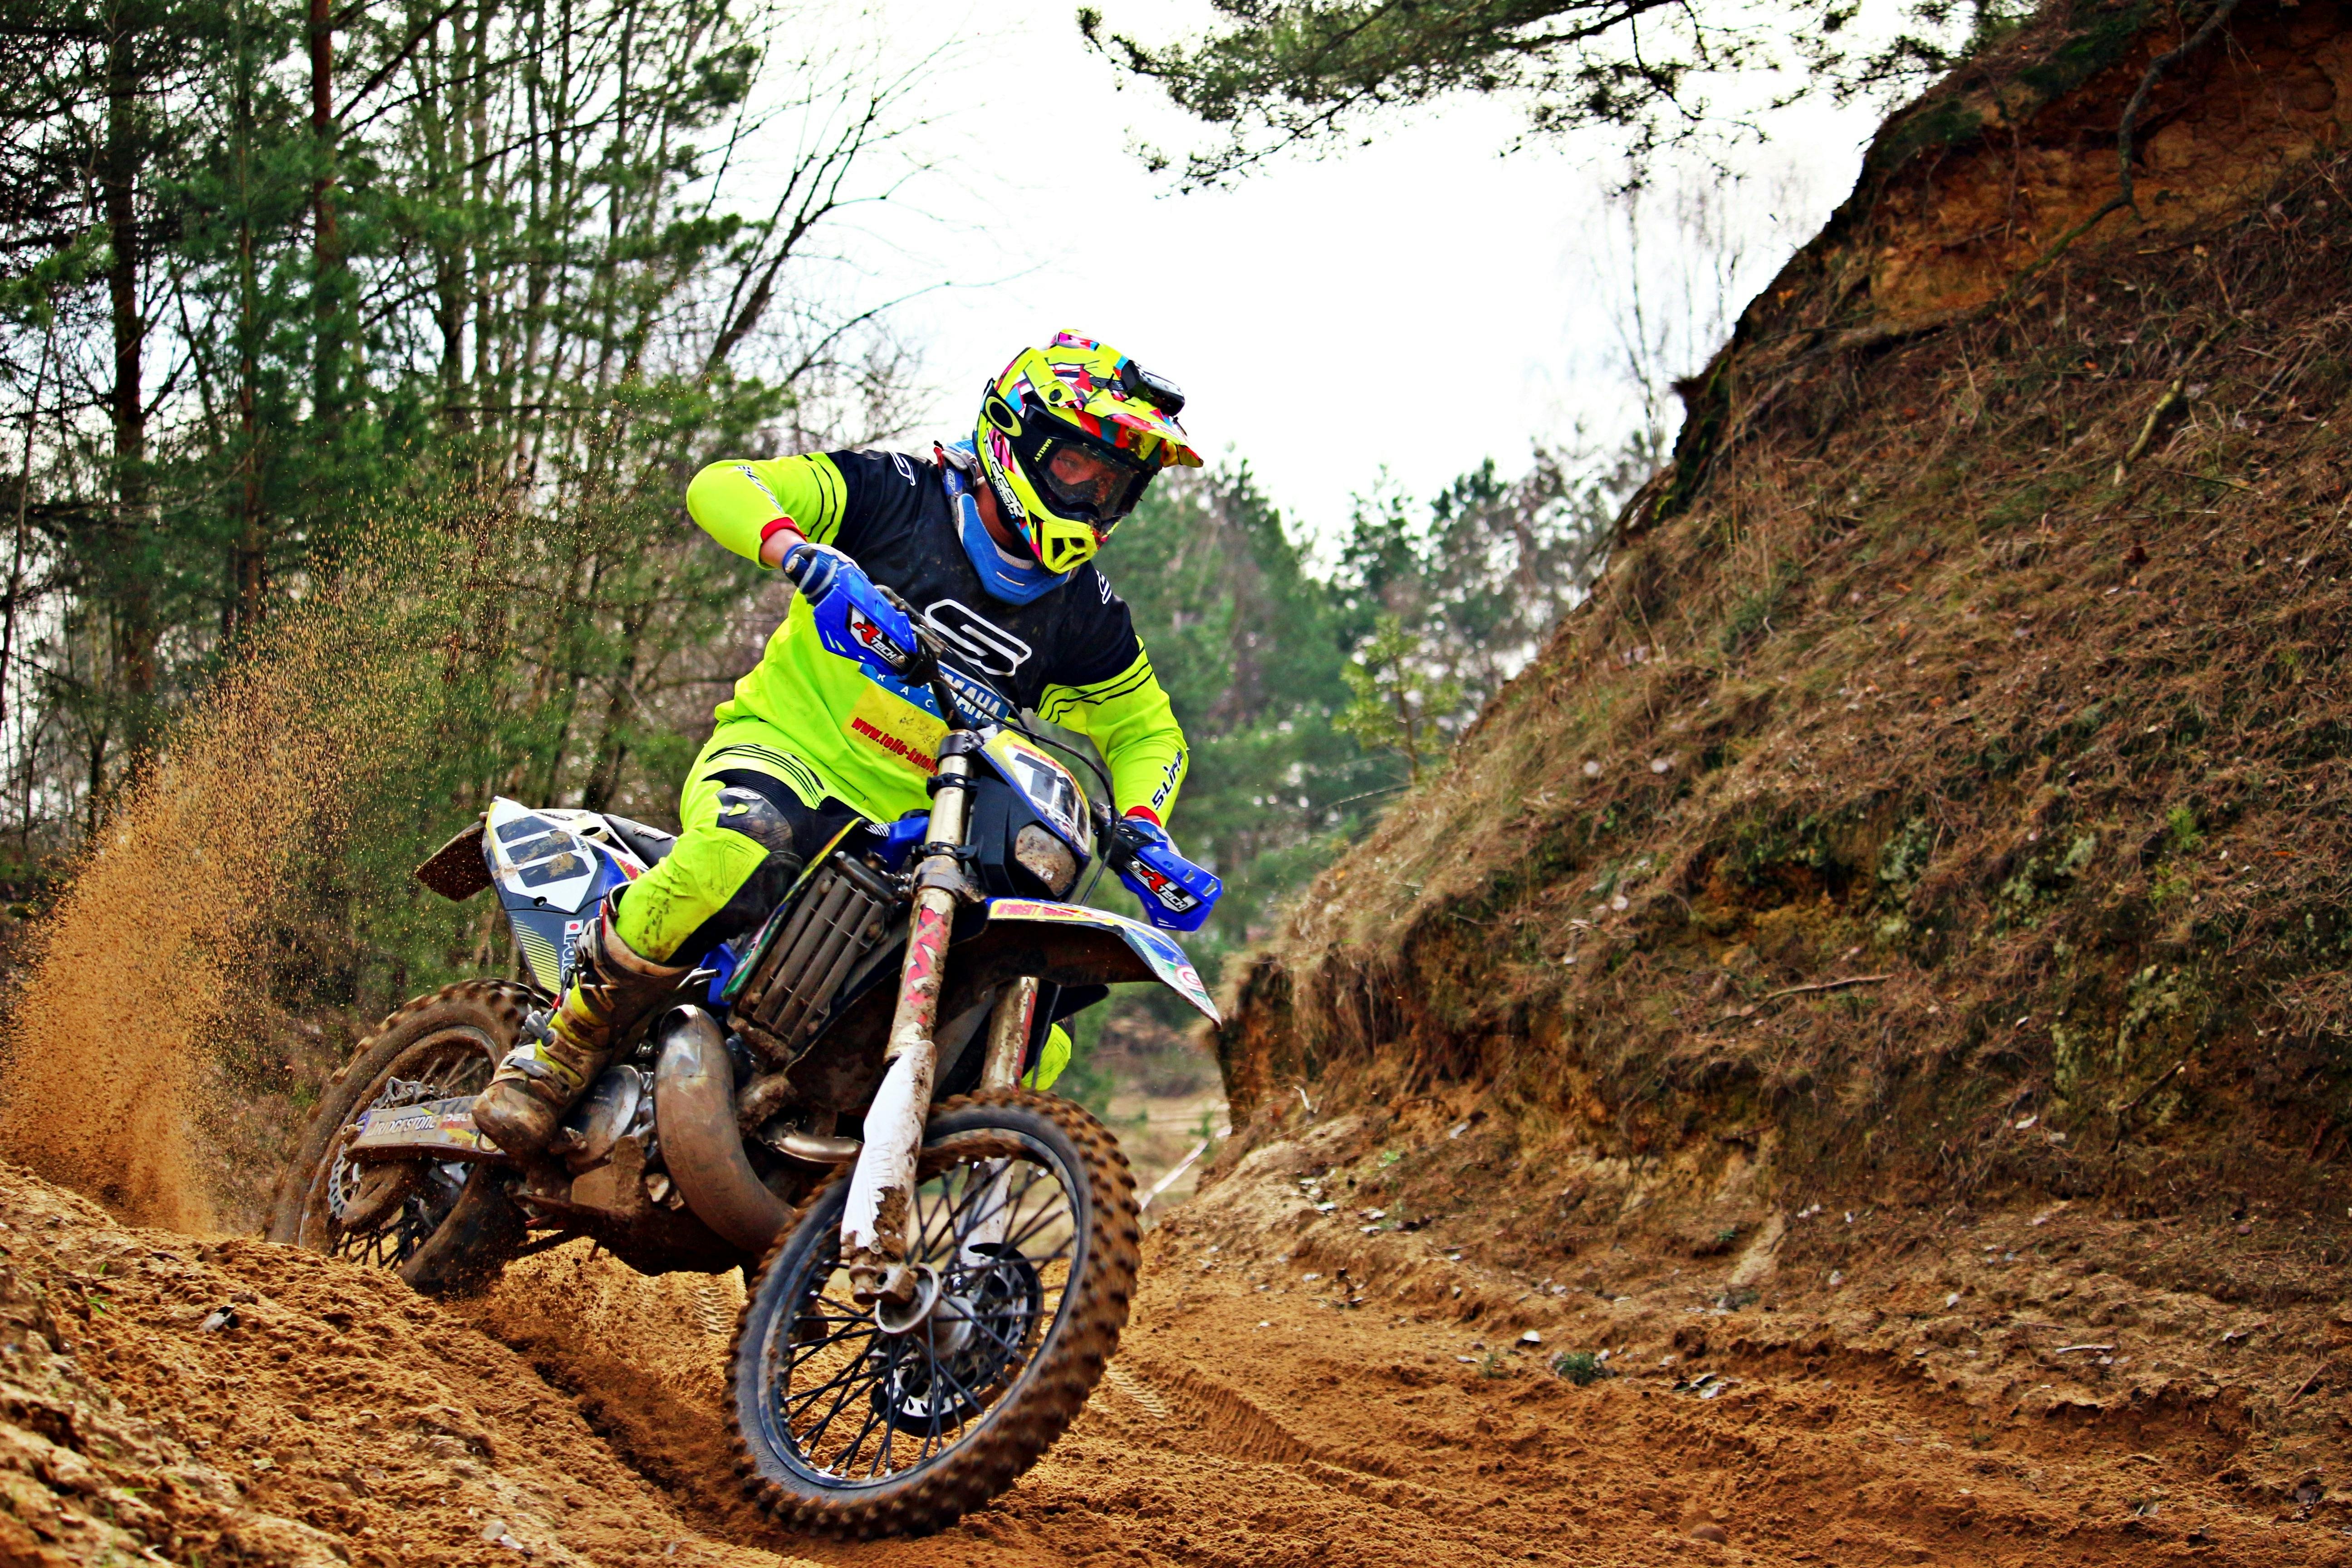 Rider Riding Green Motocross Dirt Bike . Free Stock Photo